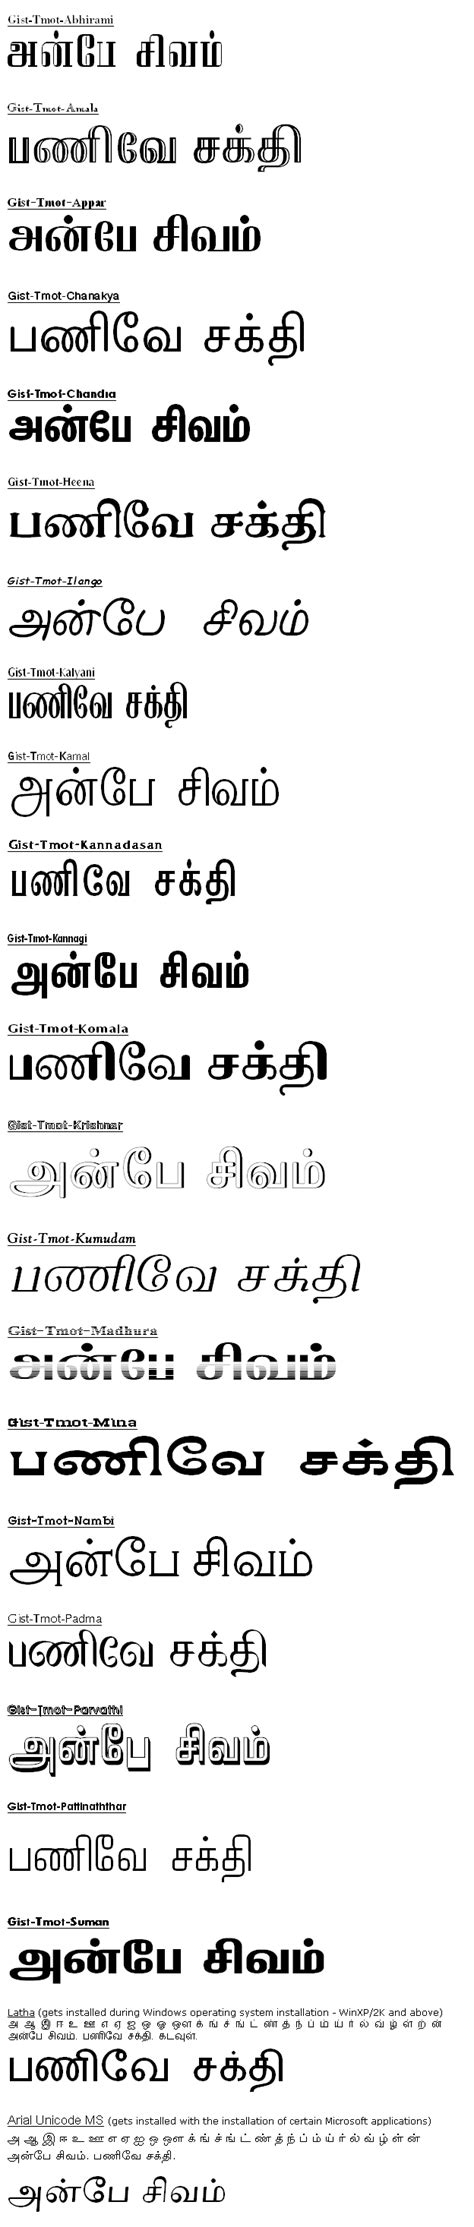 Free Tamil Fonts 1000 Of Them Beautiful Saiindira Tscii Unicode